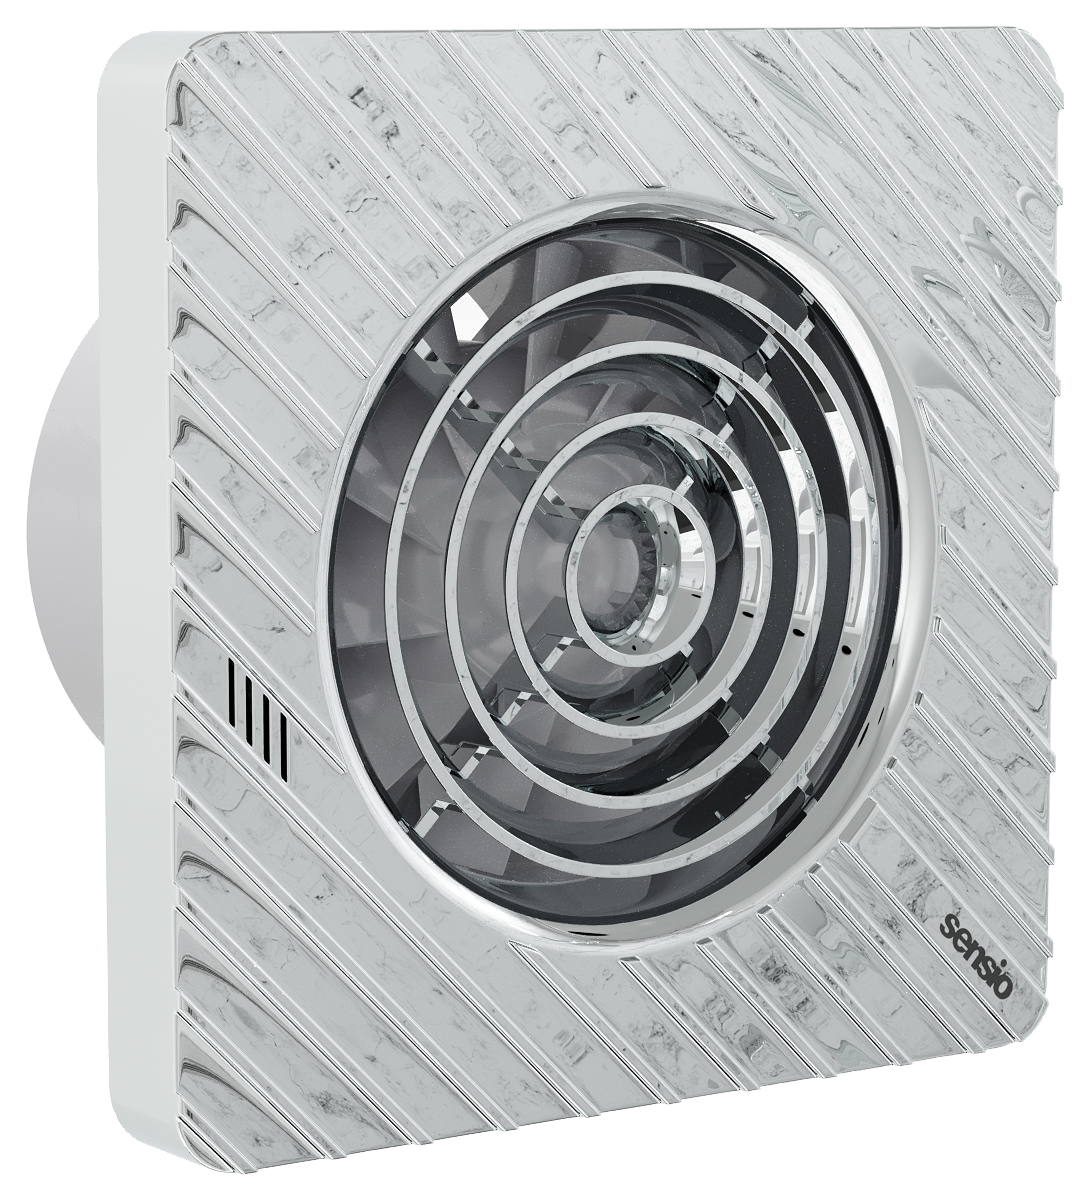 Sensio Drax Chrome Wall Ventilation Fan with Aquilo Ventilation Ducting Kit - 100mm